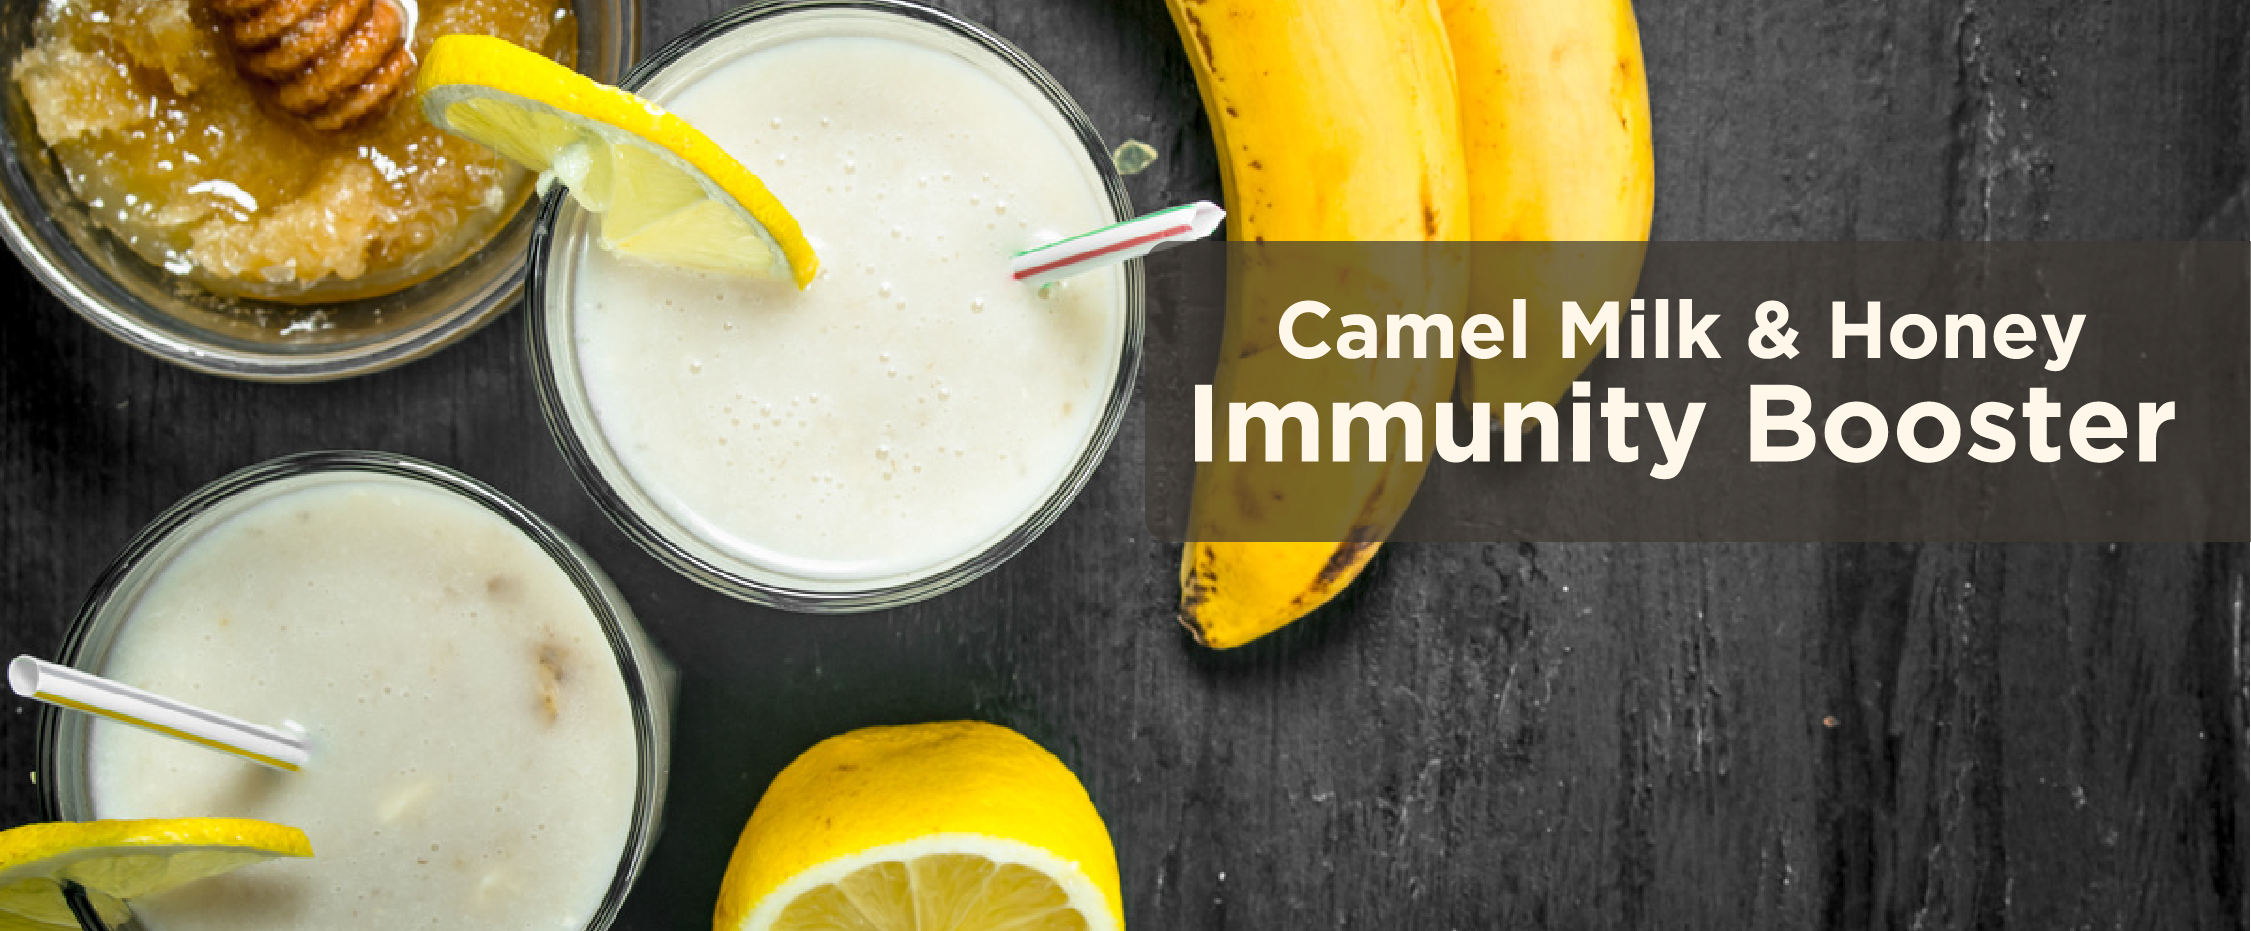 Camel Milk & Honey Immunity Booster